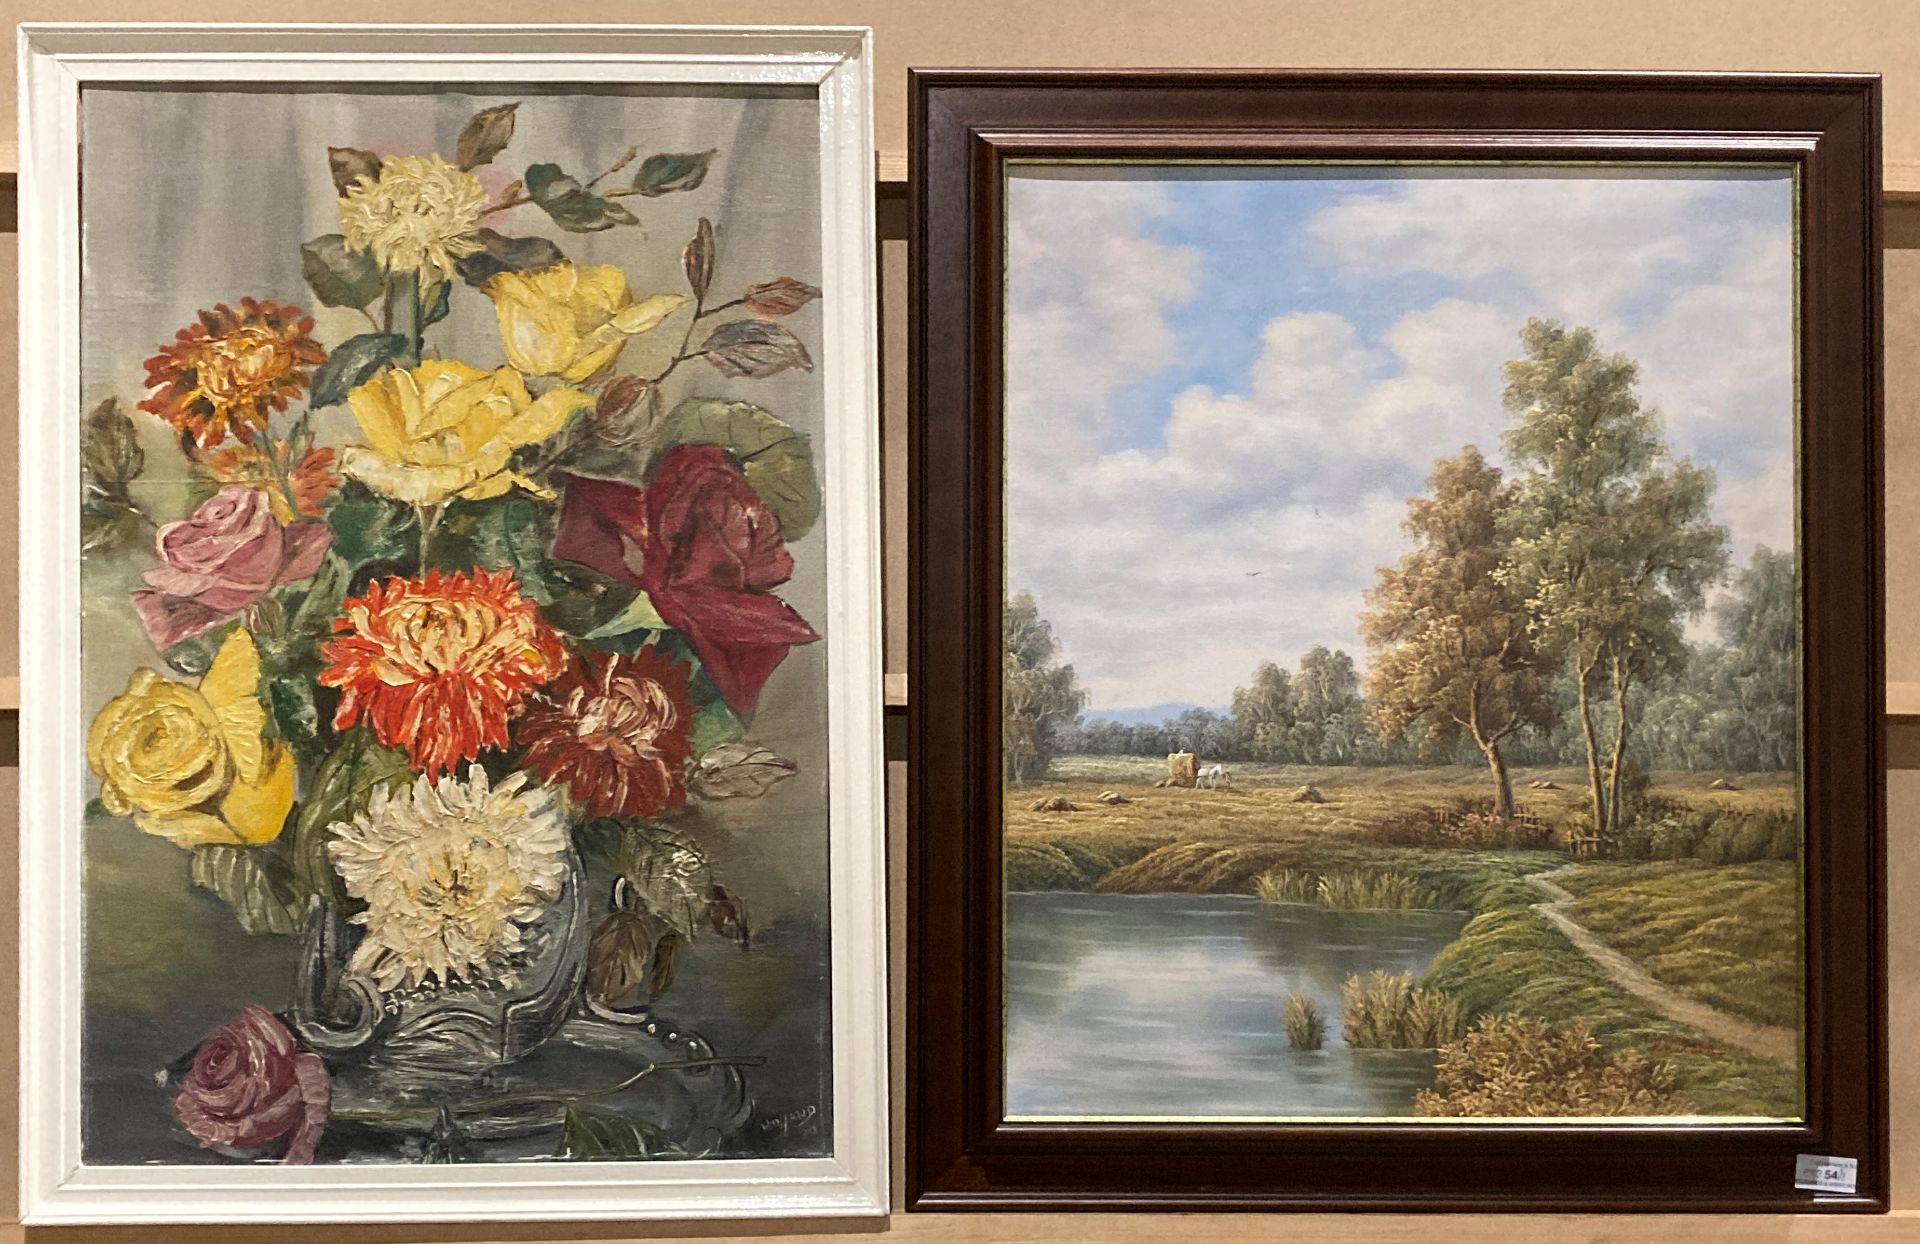 P Wilson, 'Hay Gathering', oil on canvas, framed, 60cm x 50cm and Holland '70, 'Still Life',